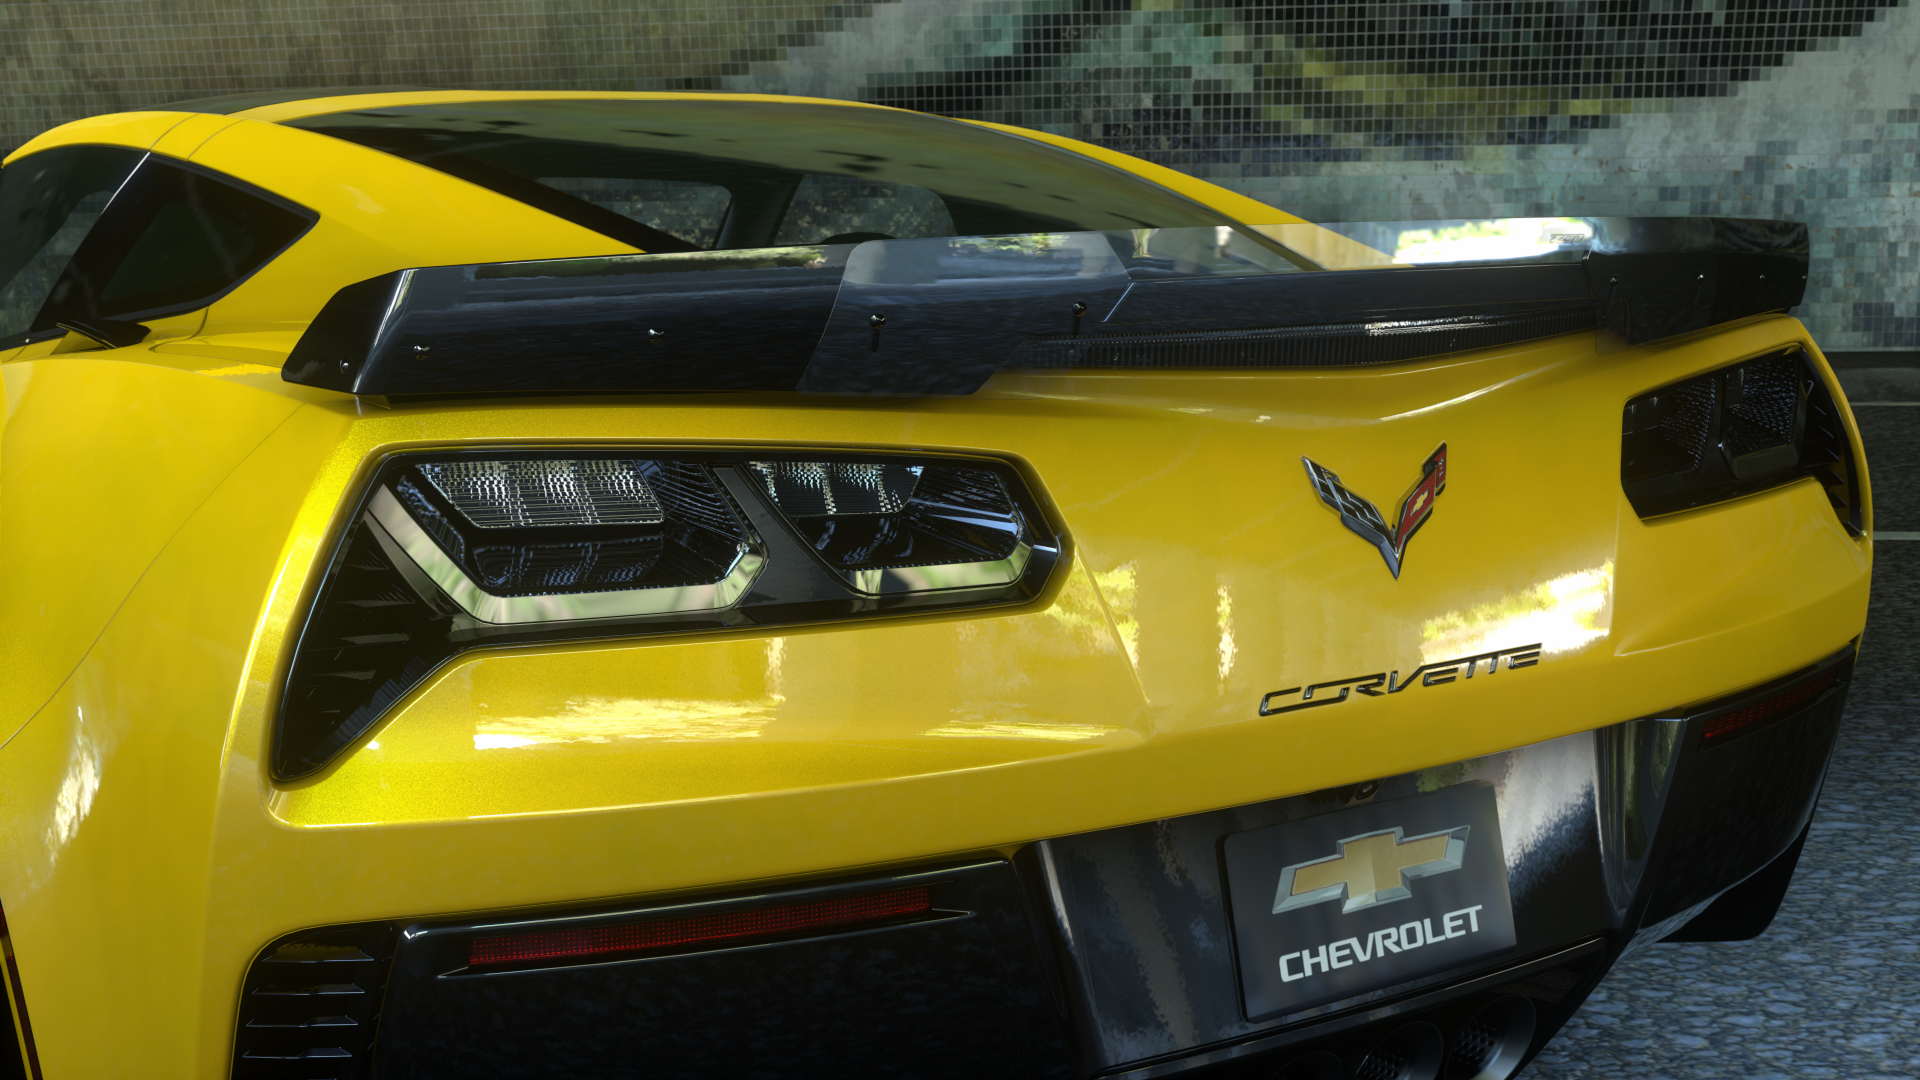 General 1920x1080 Driveclub Chevrolet Chevrolet Corvette Z06 video games car vehicle closeup yellow cars racing